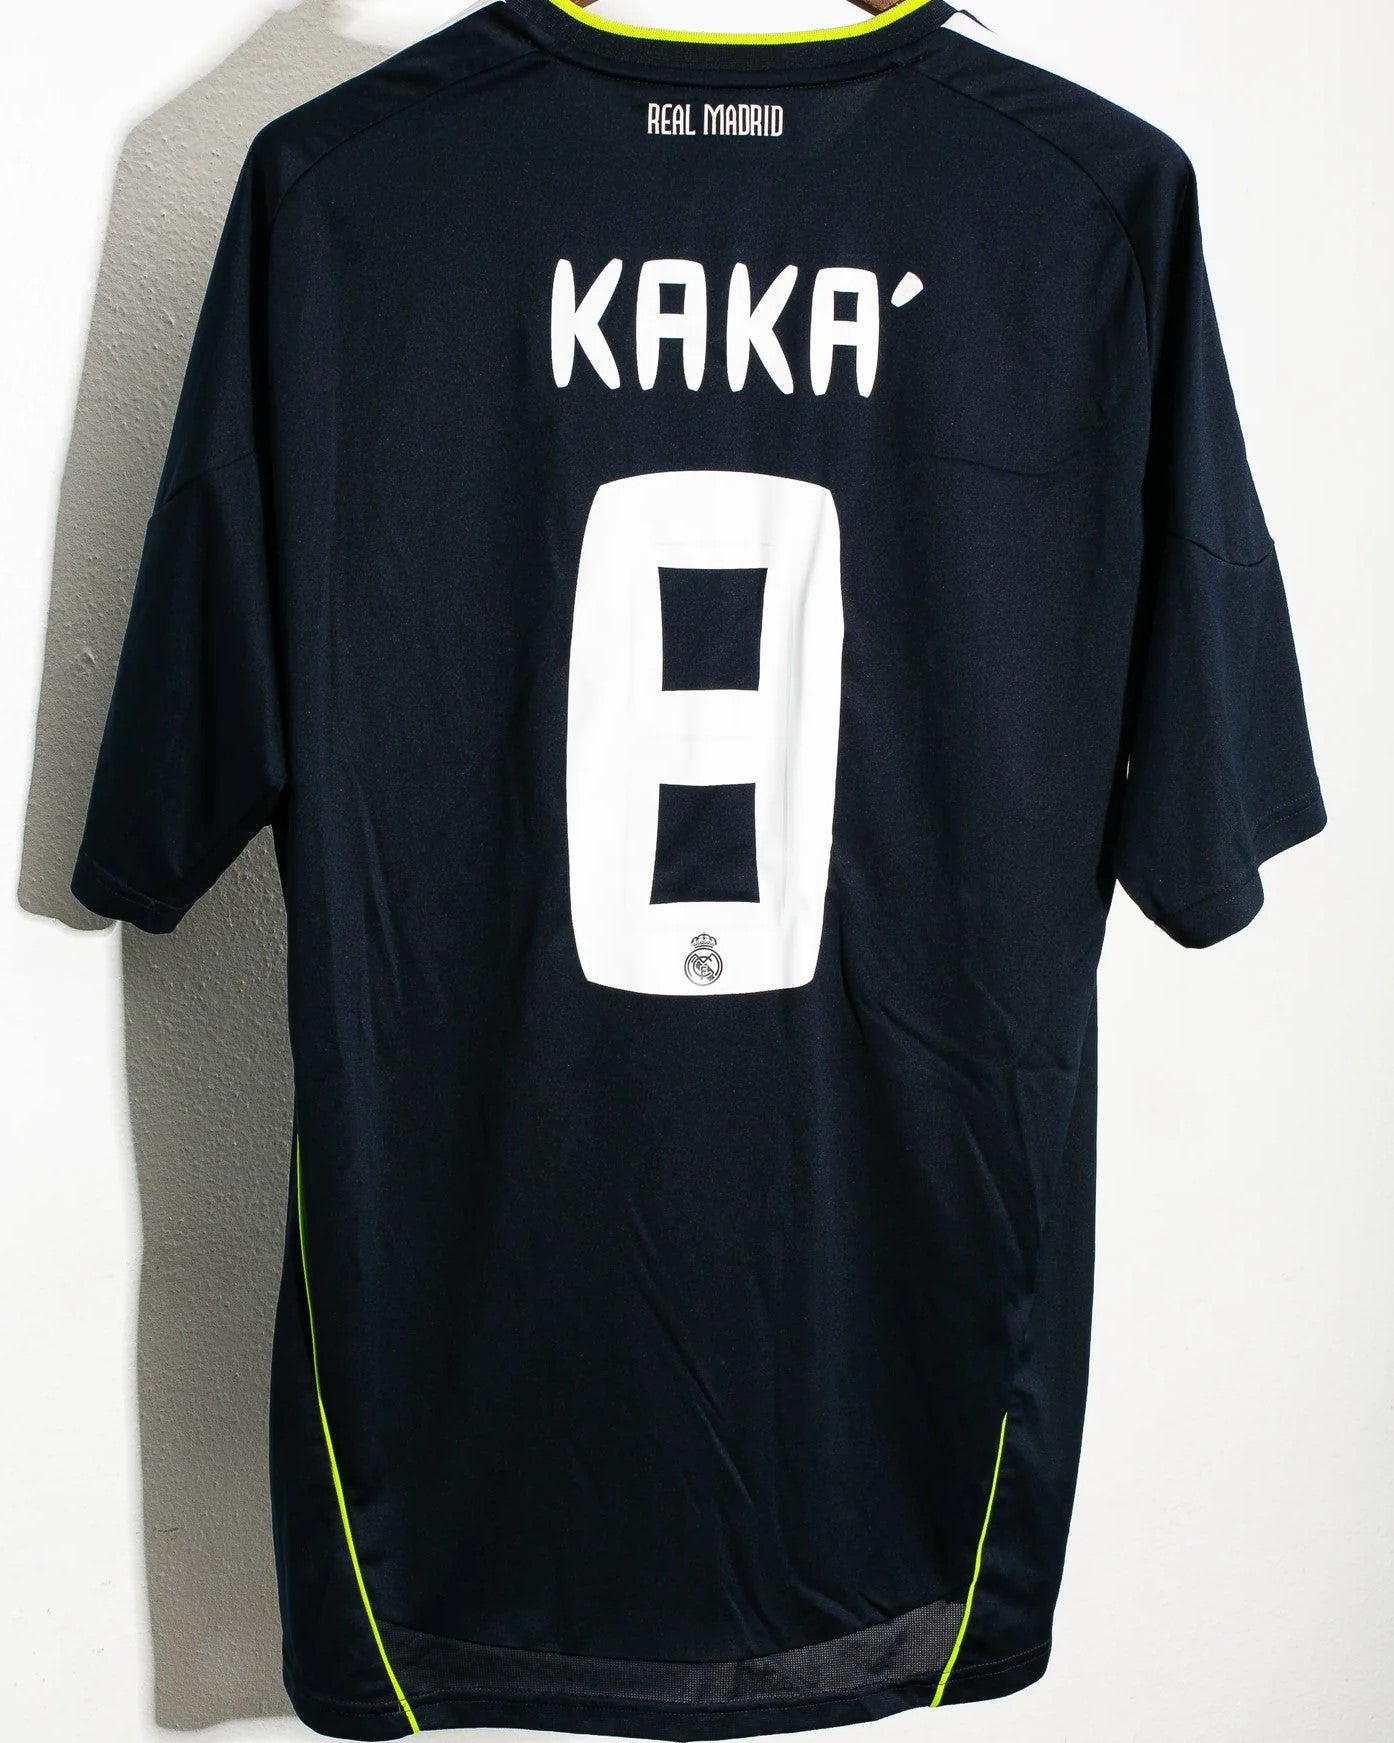 KAKA' RICARDO 2010-11 (Real M)